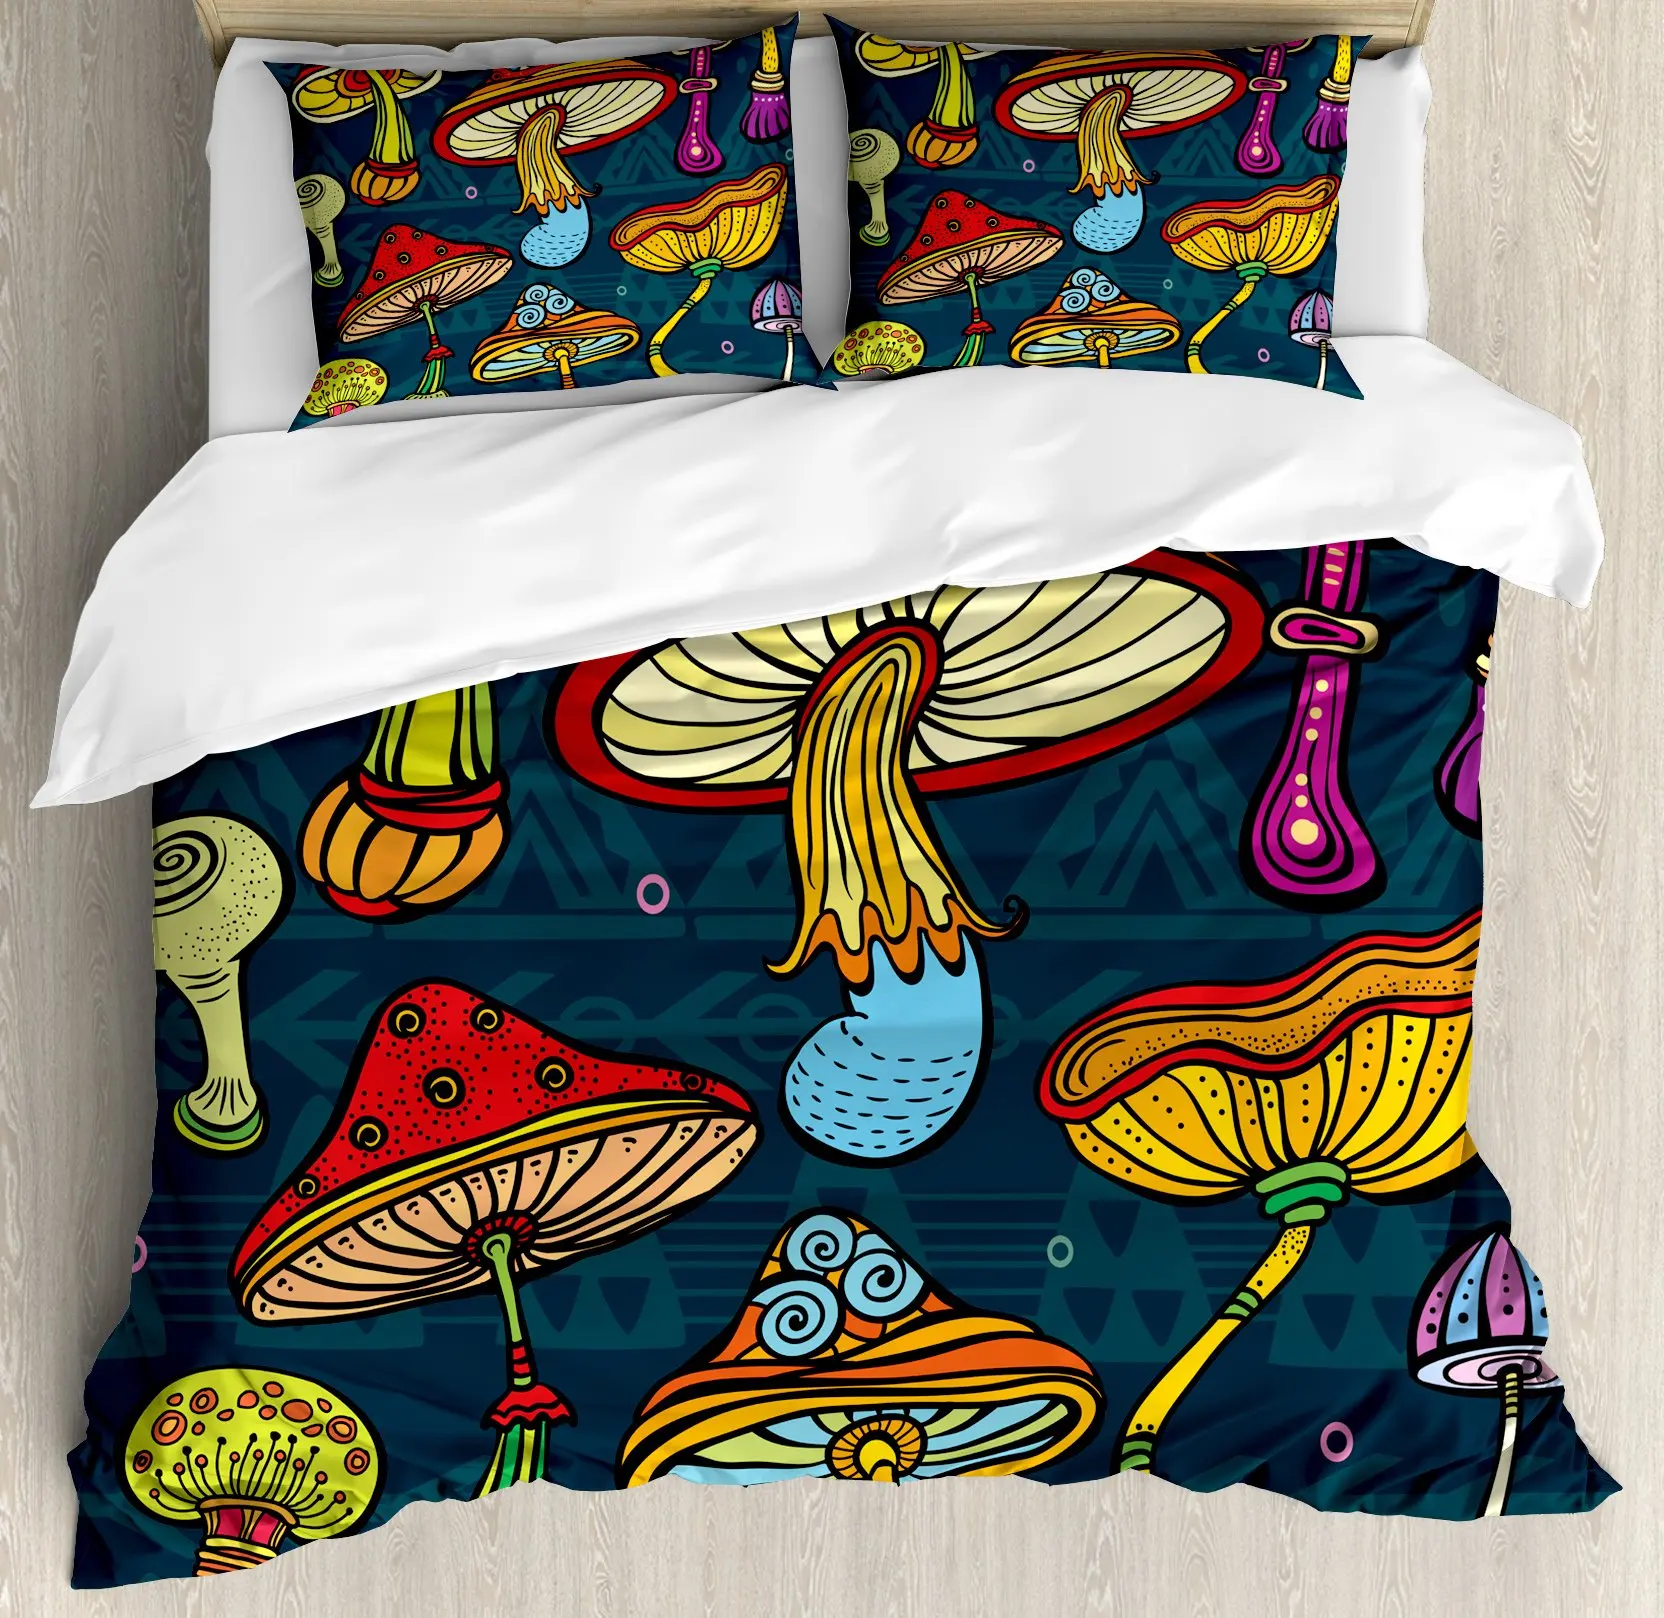 Mushroom Duvet Cover Colorful Gold Pattern Cartoon Plant Beddings for Teen Boys Girls Kids,Queen/King Microfiber Comforter Cover